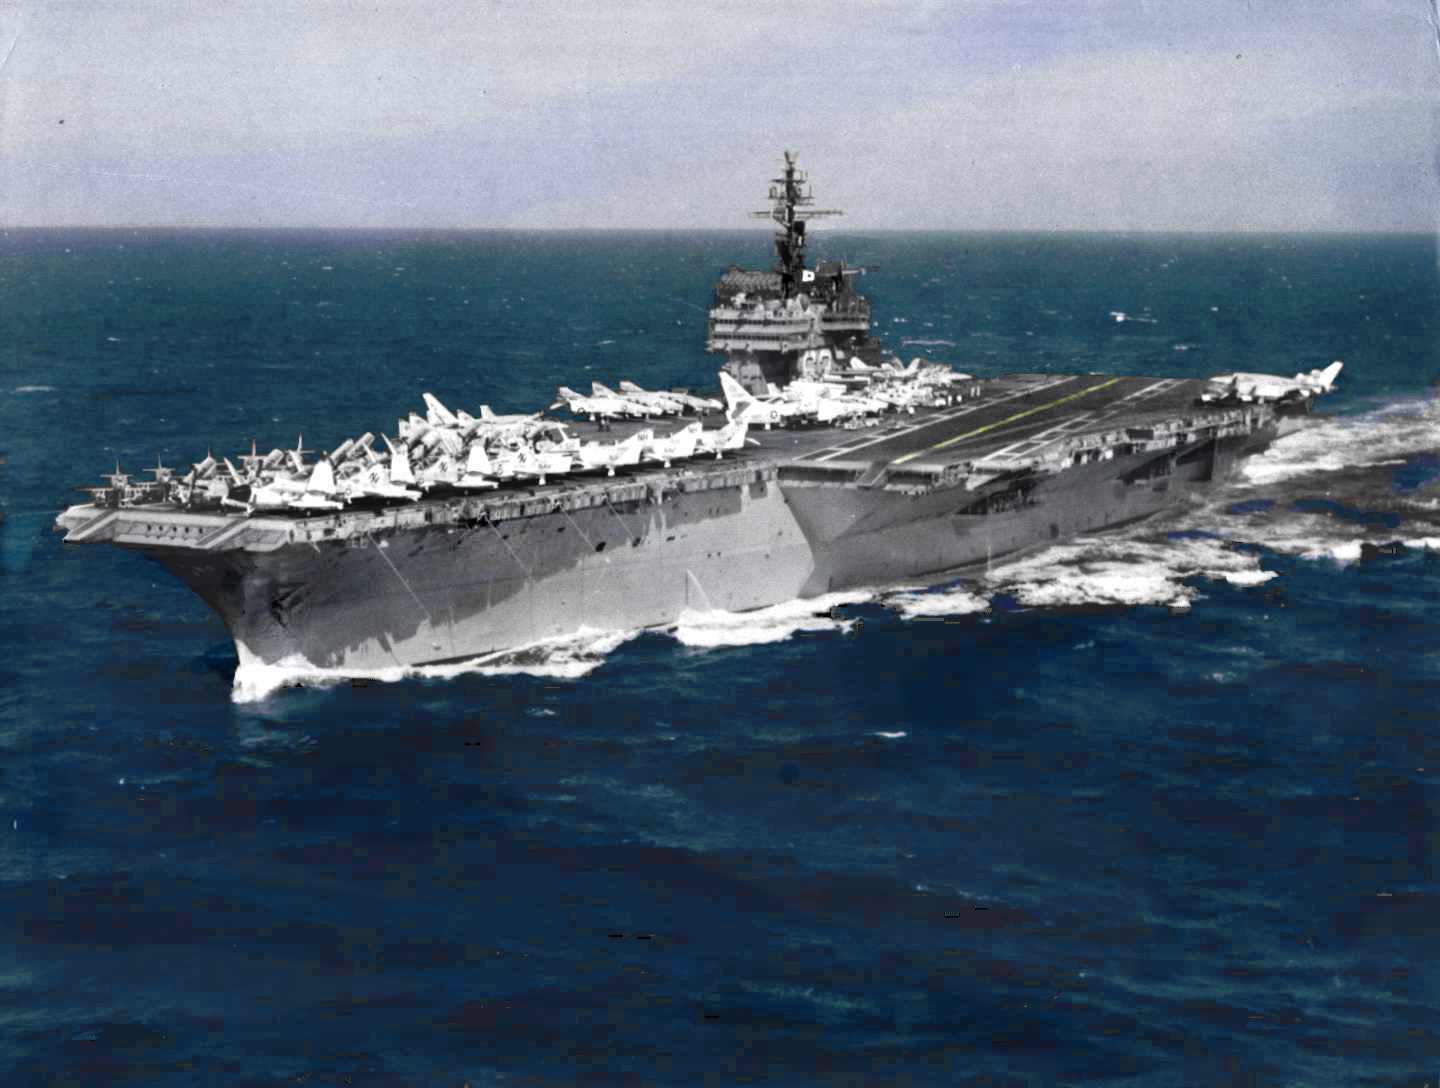 A beatuiful Photo of the USS Kitty Hawk At Sea